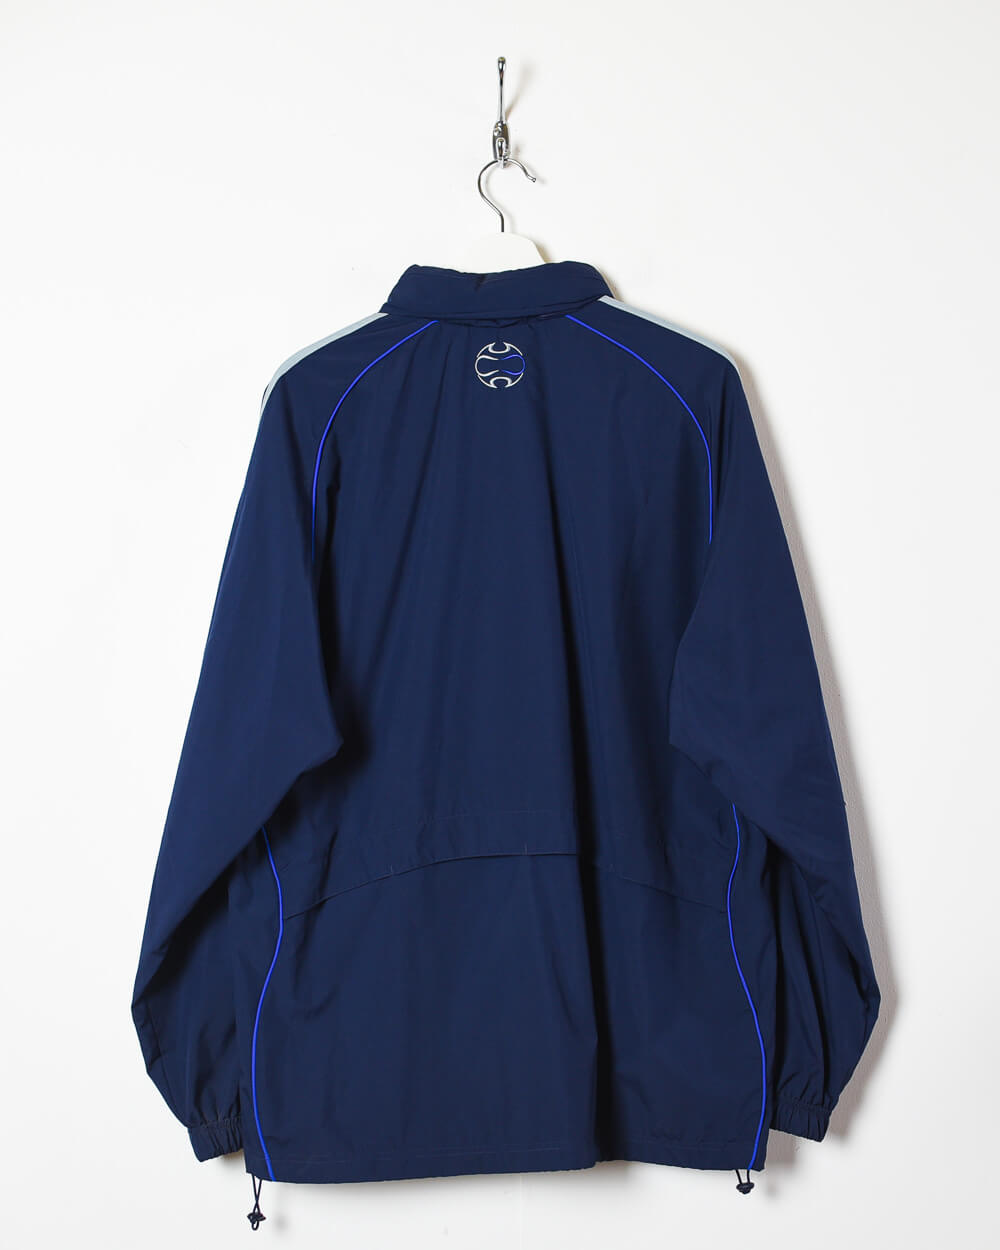 Navy Nike Chelsea FC Windbreaker Jacket - Medium